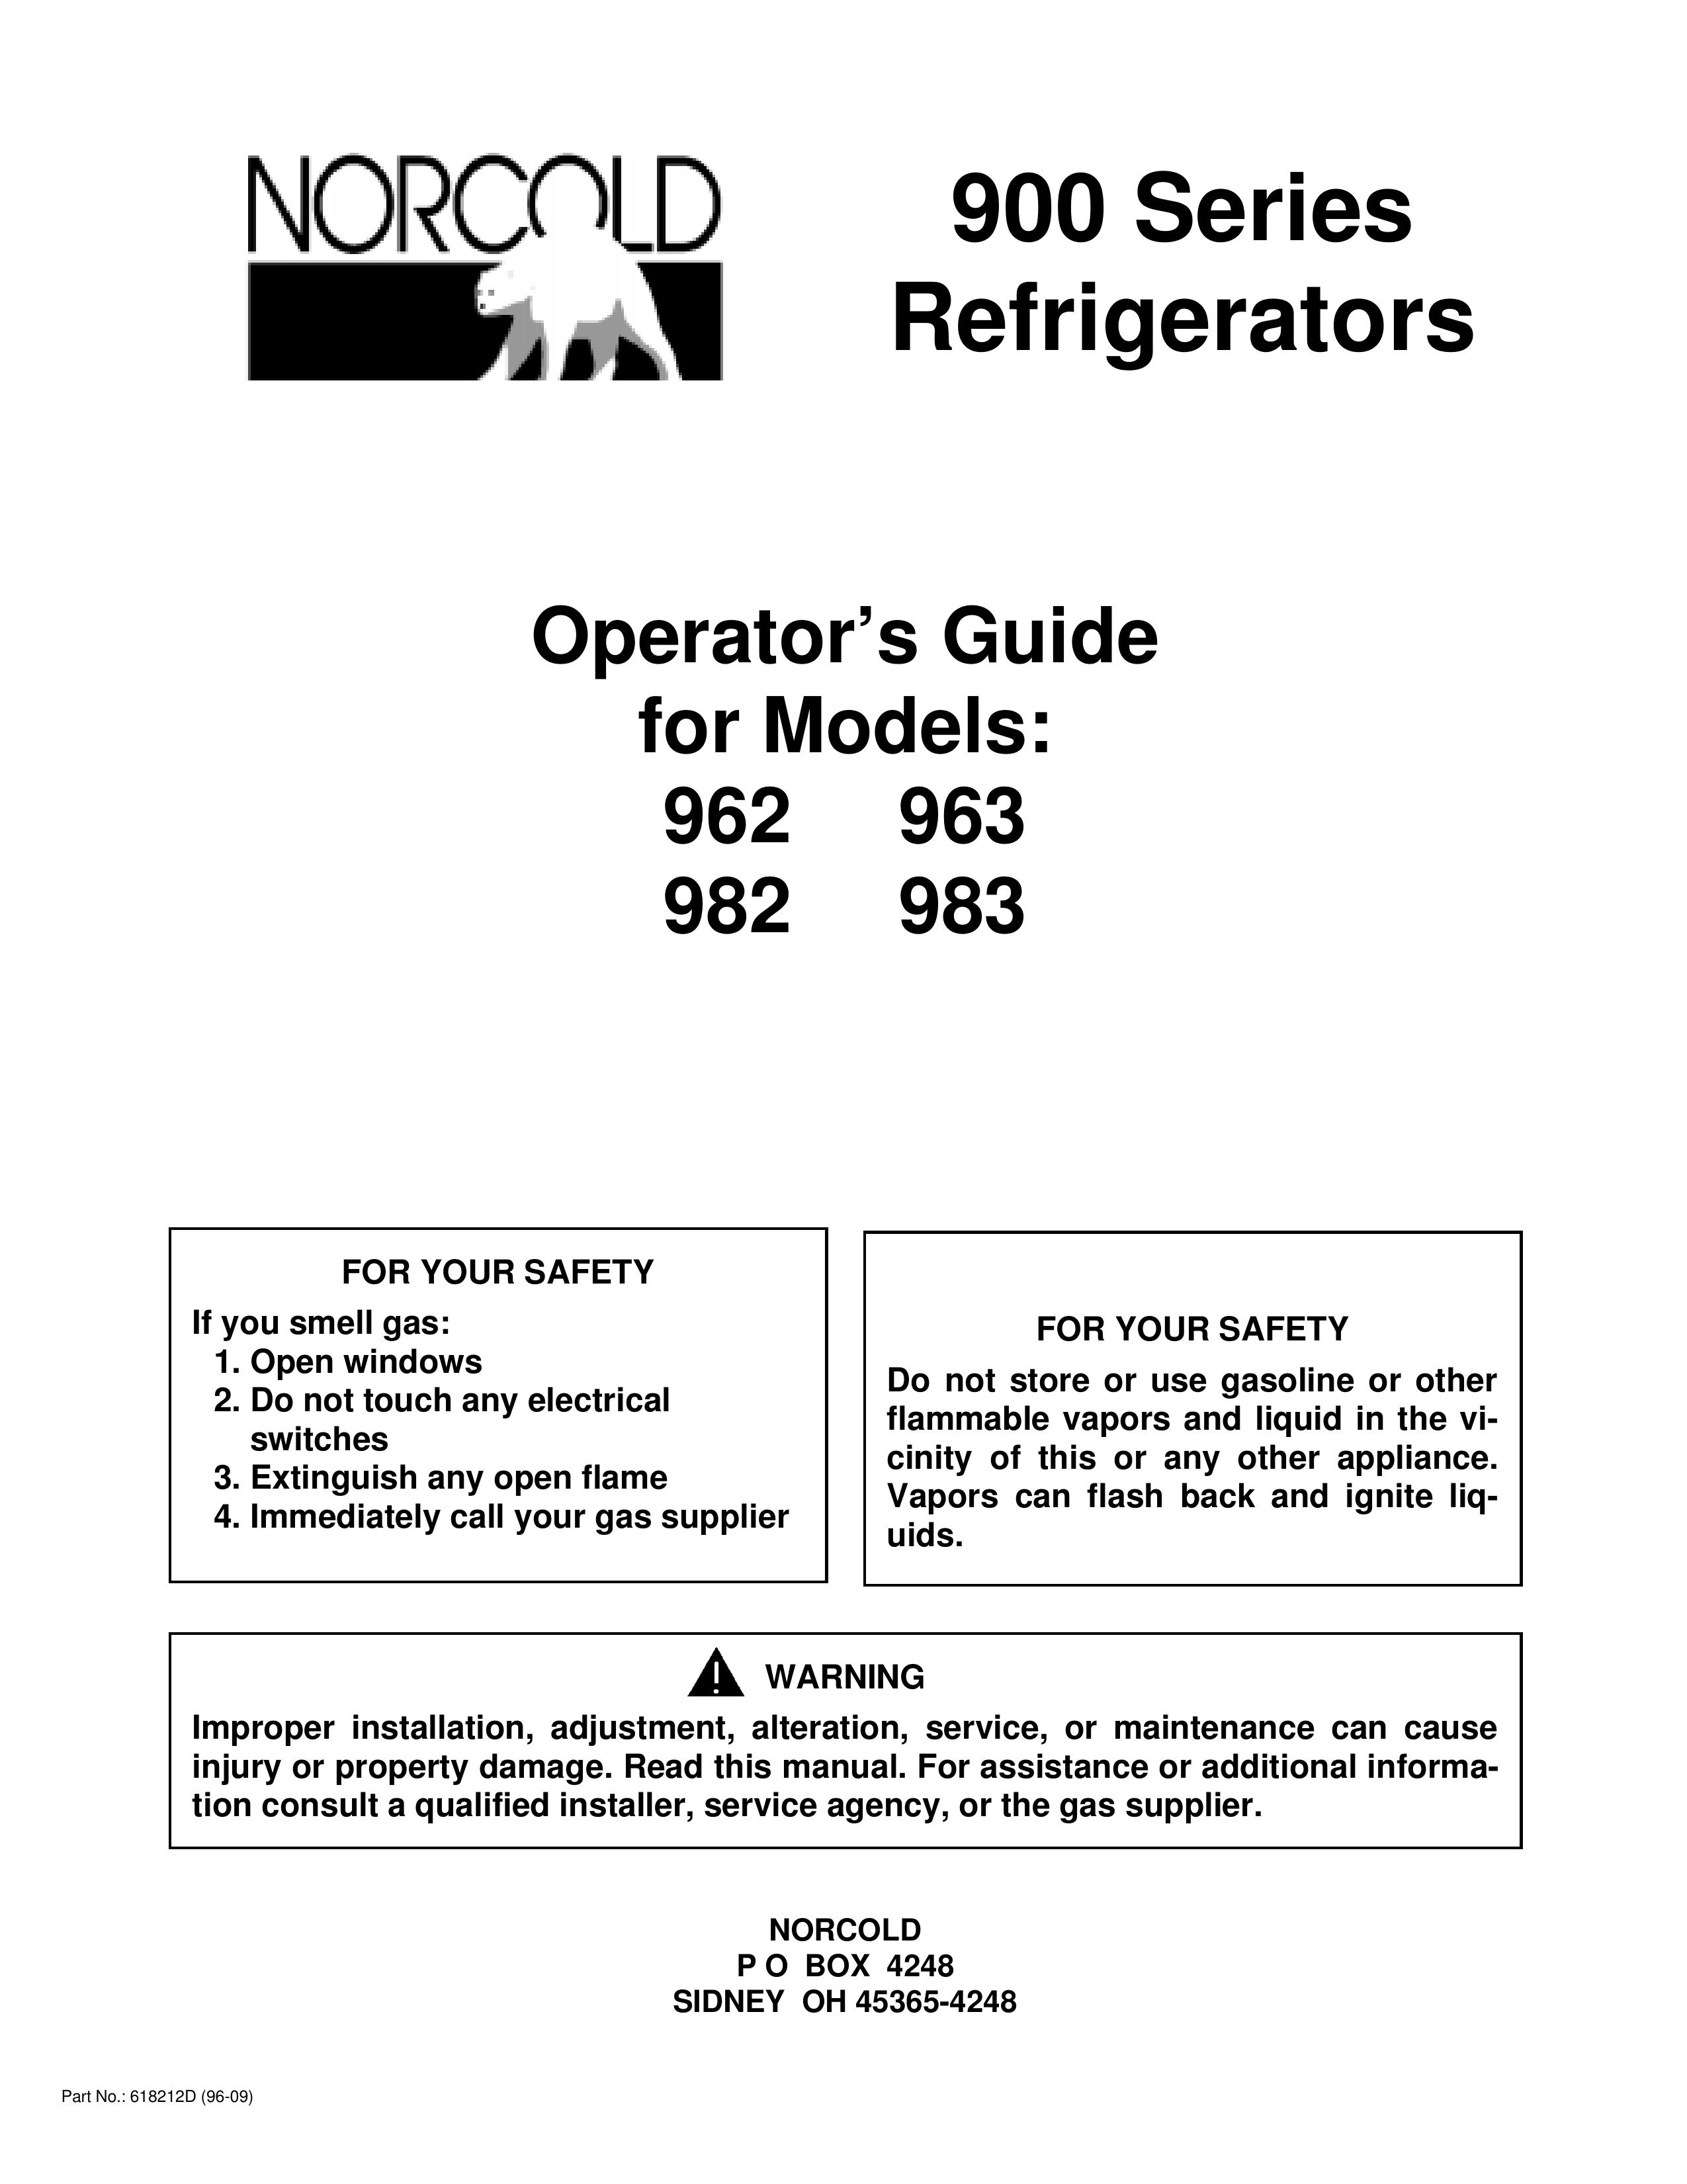 Norcold 962 Refrigerator User Manual